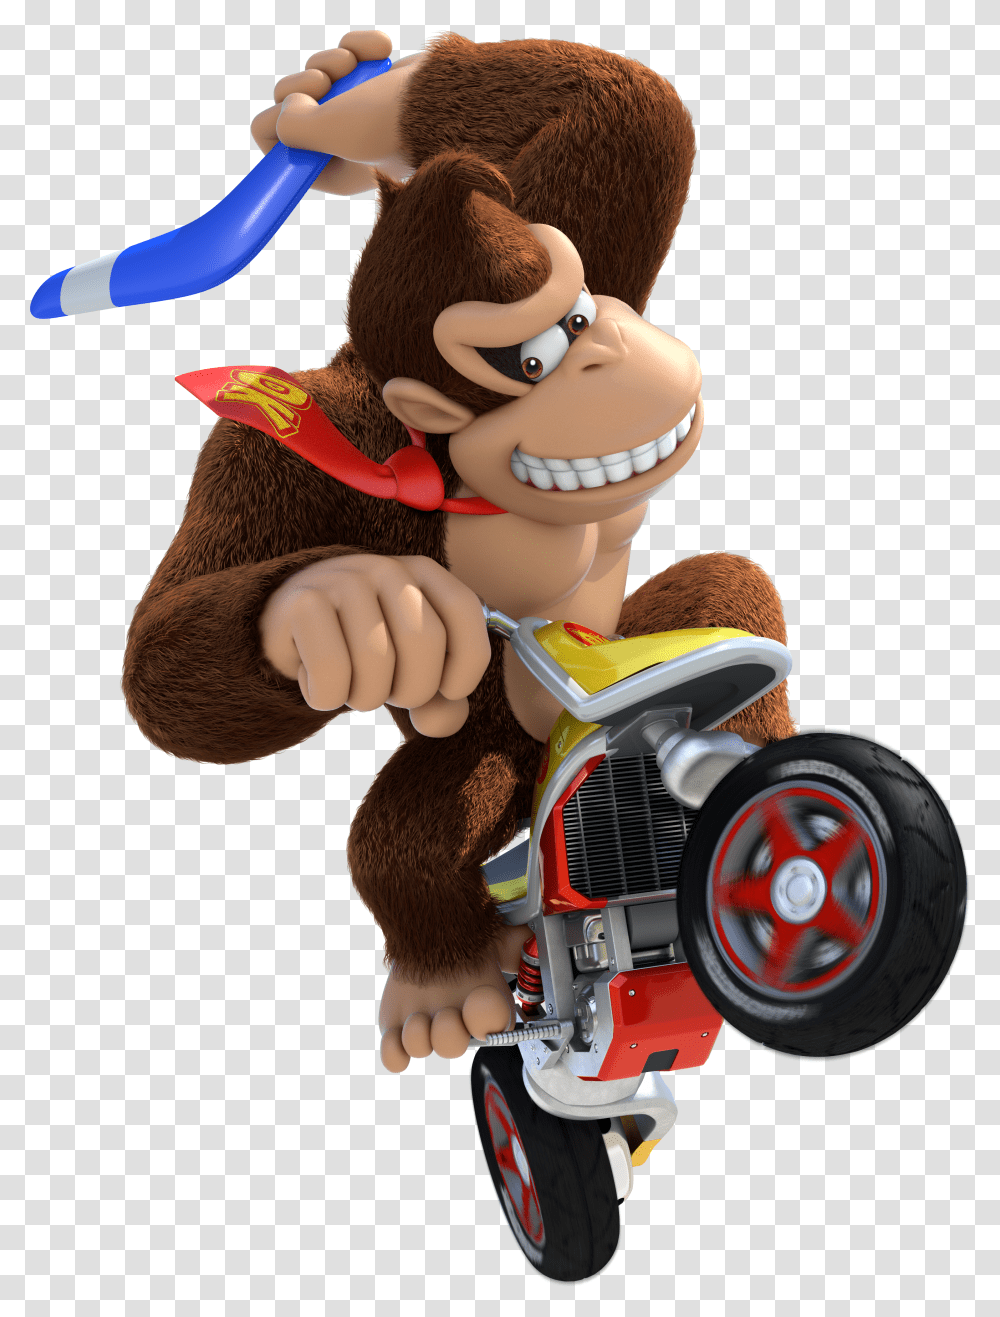 Mario Kart 8 Deluxe Donkey Kong Transparent Png